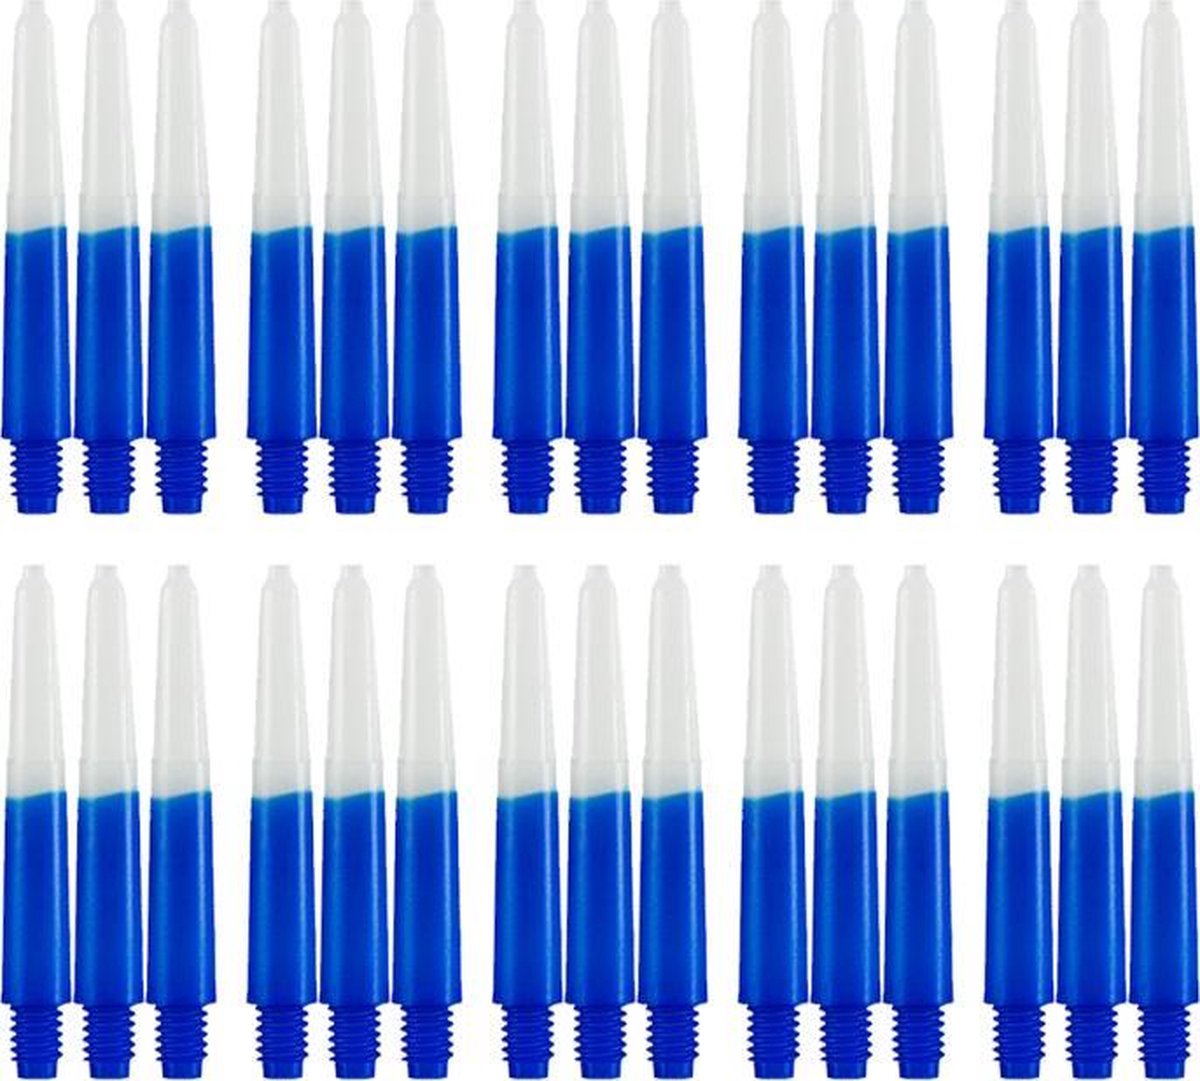 Dragon darts - Two Tone Blauw - short - dart shafts - multipack 10 sets - darts shafts